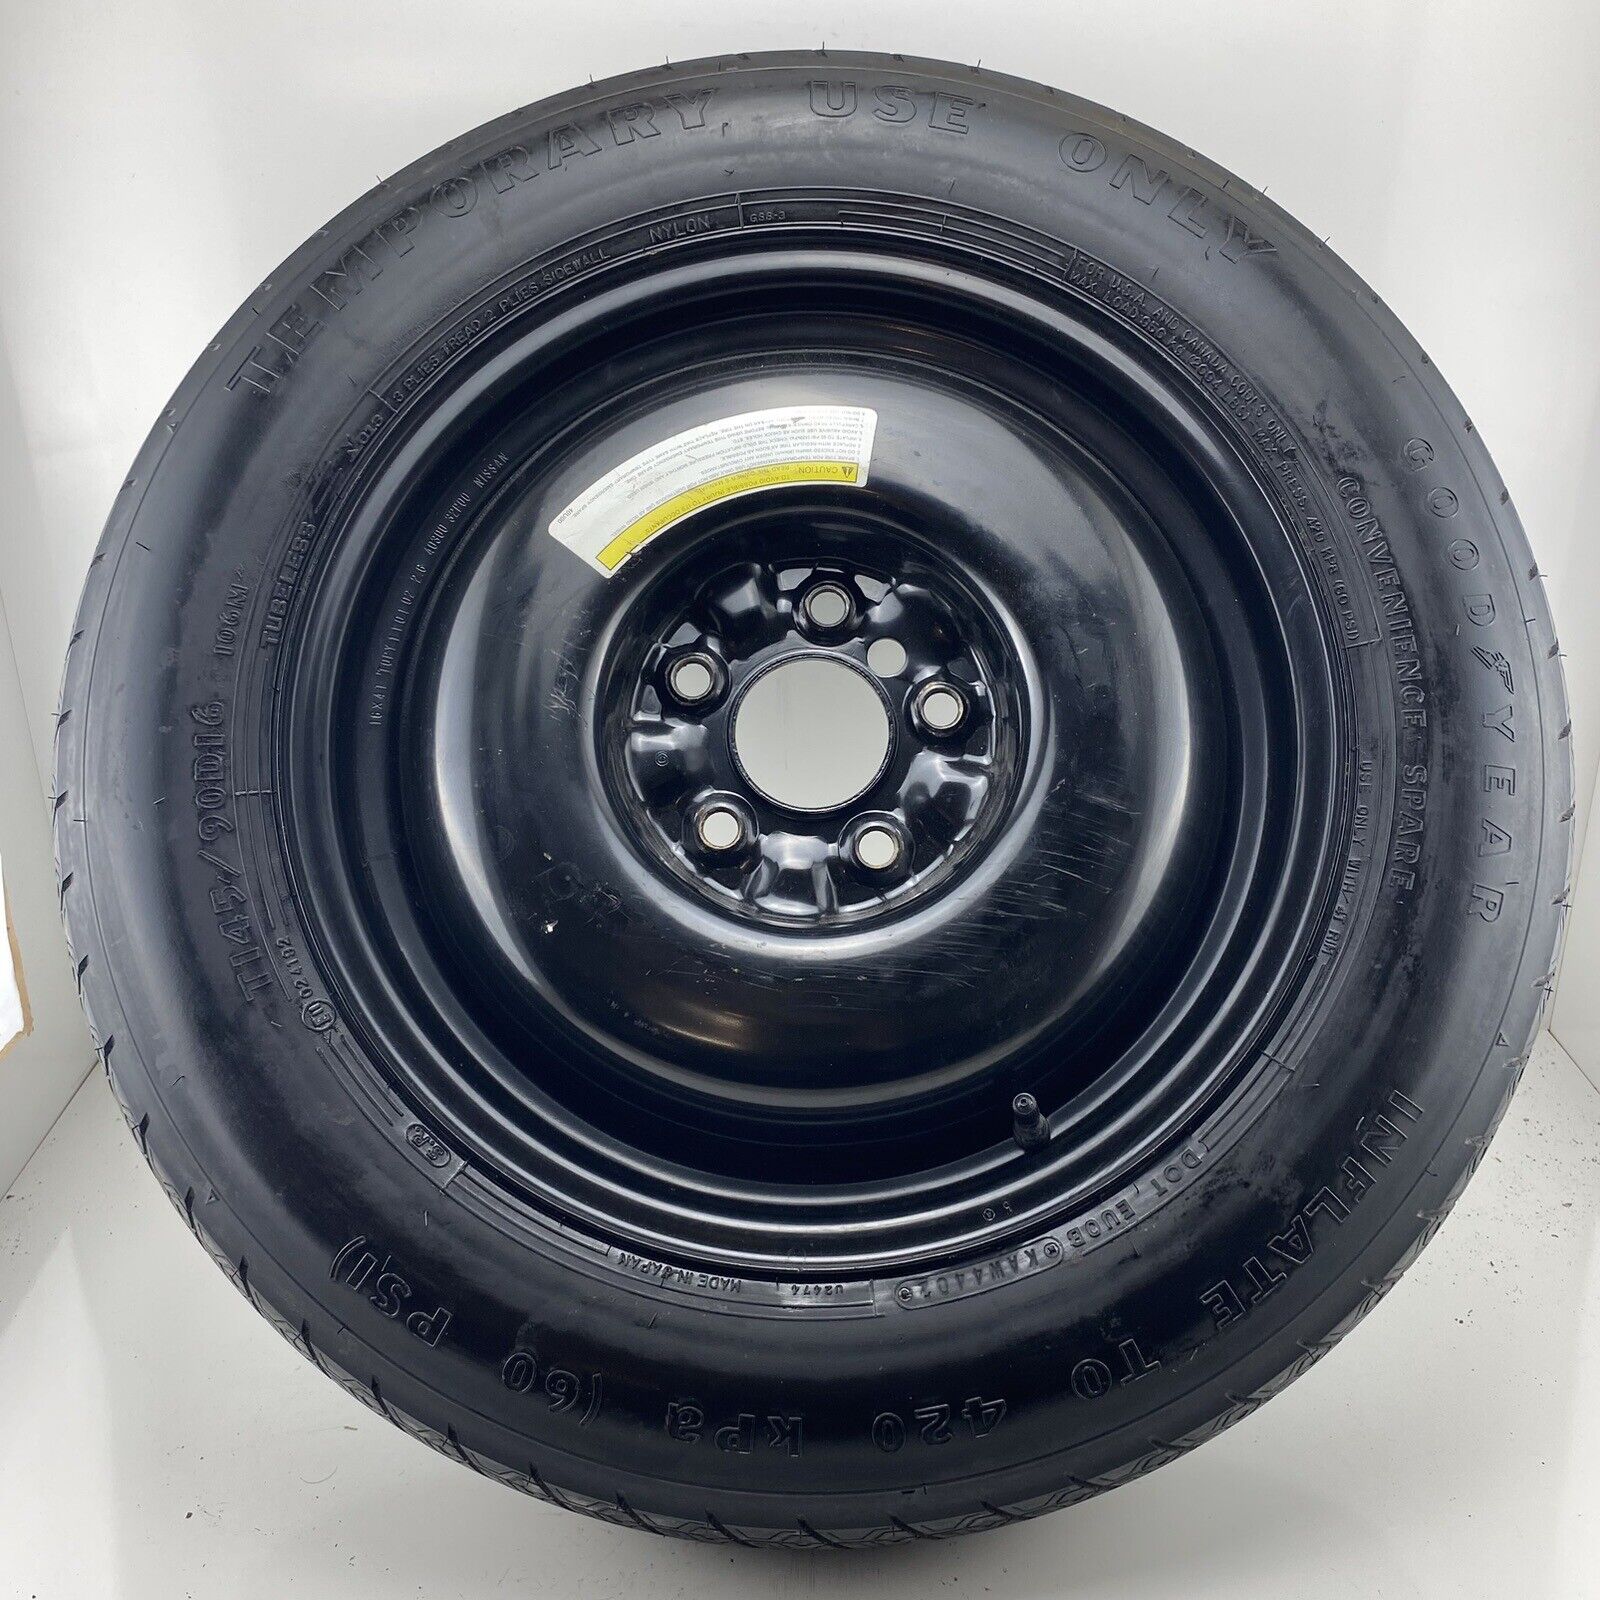 2003-2006 Infiniti G35 Spare Tire Donut Emergency Compact Wheel T145/90D16 OEM